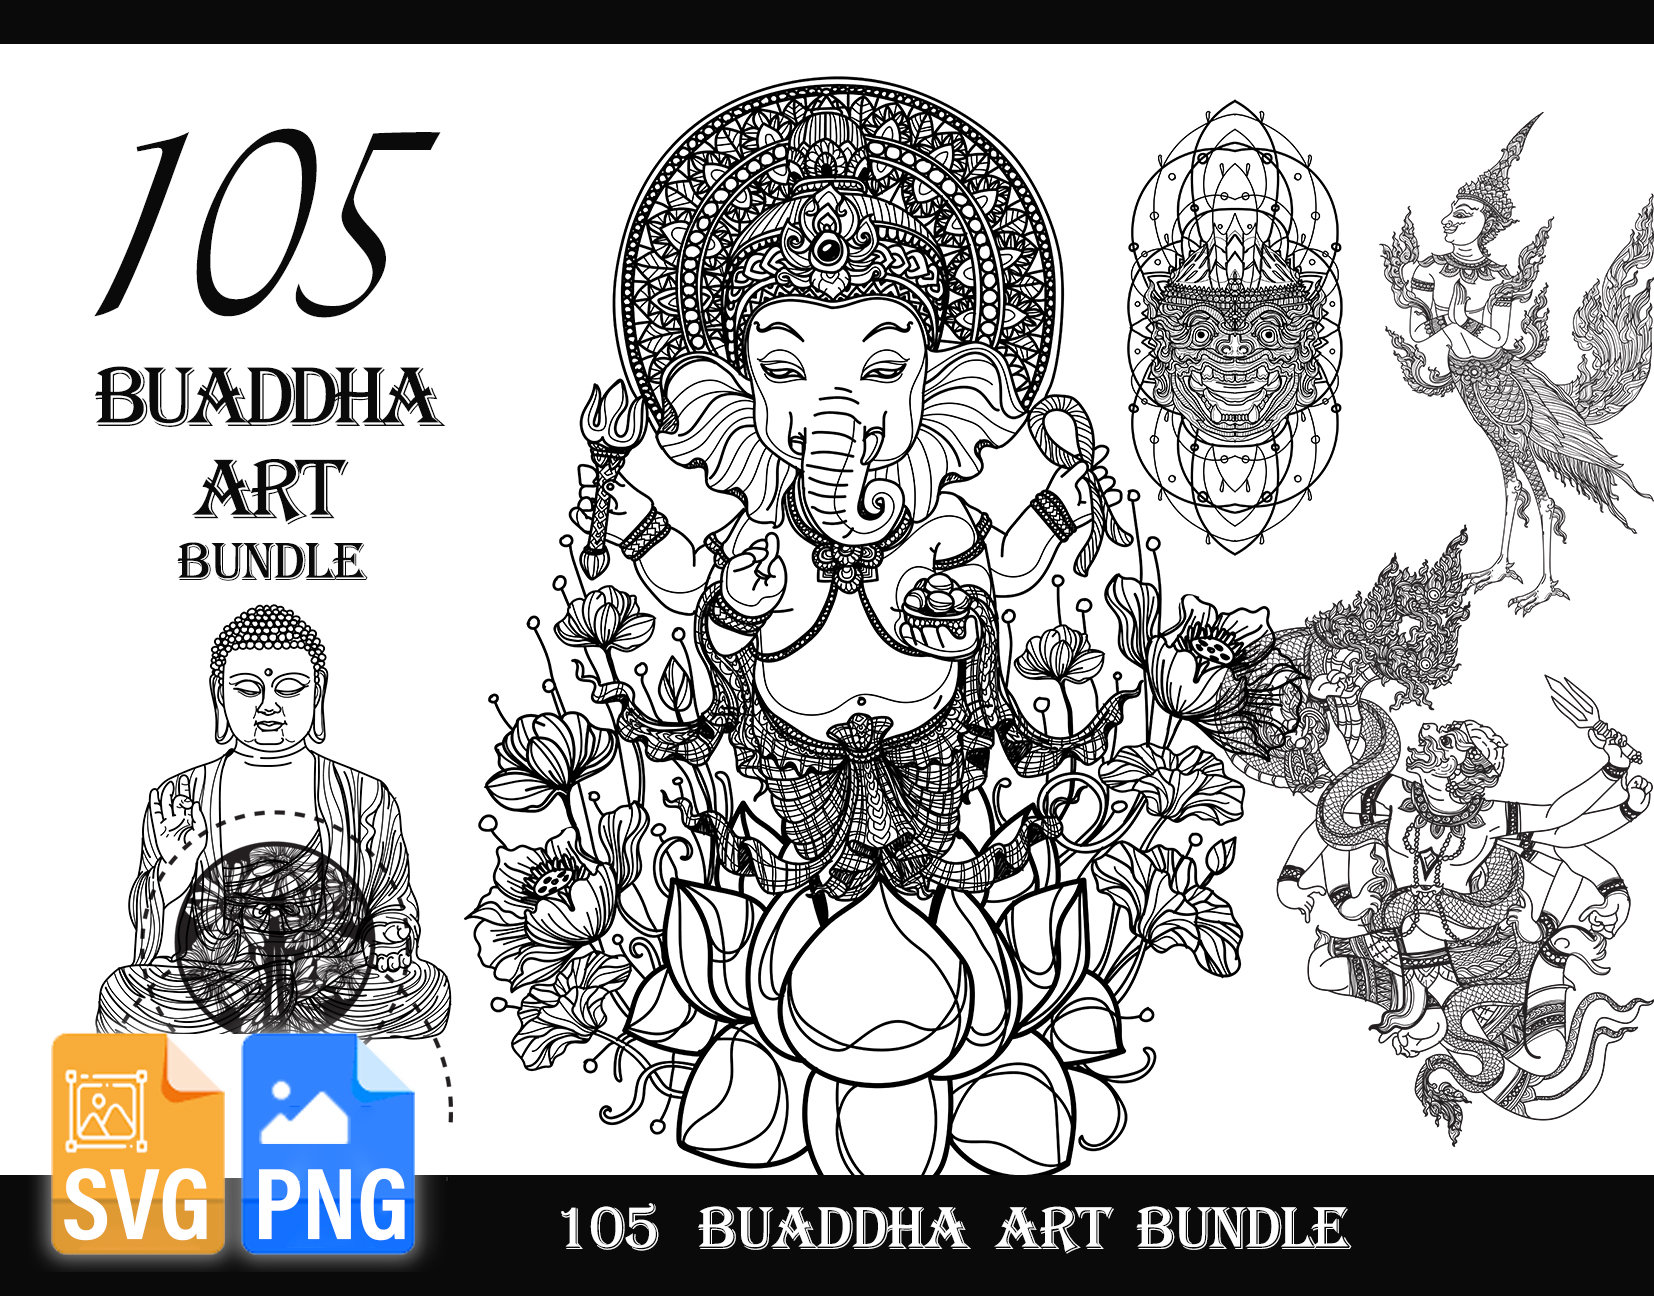 Lord Buddha  Pencil Sketches  A MYTHOLOGY BLOG